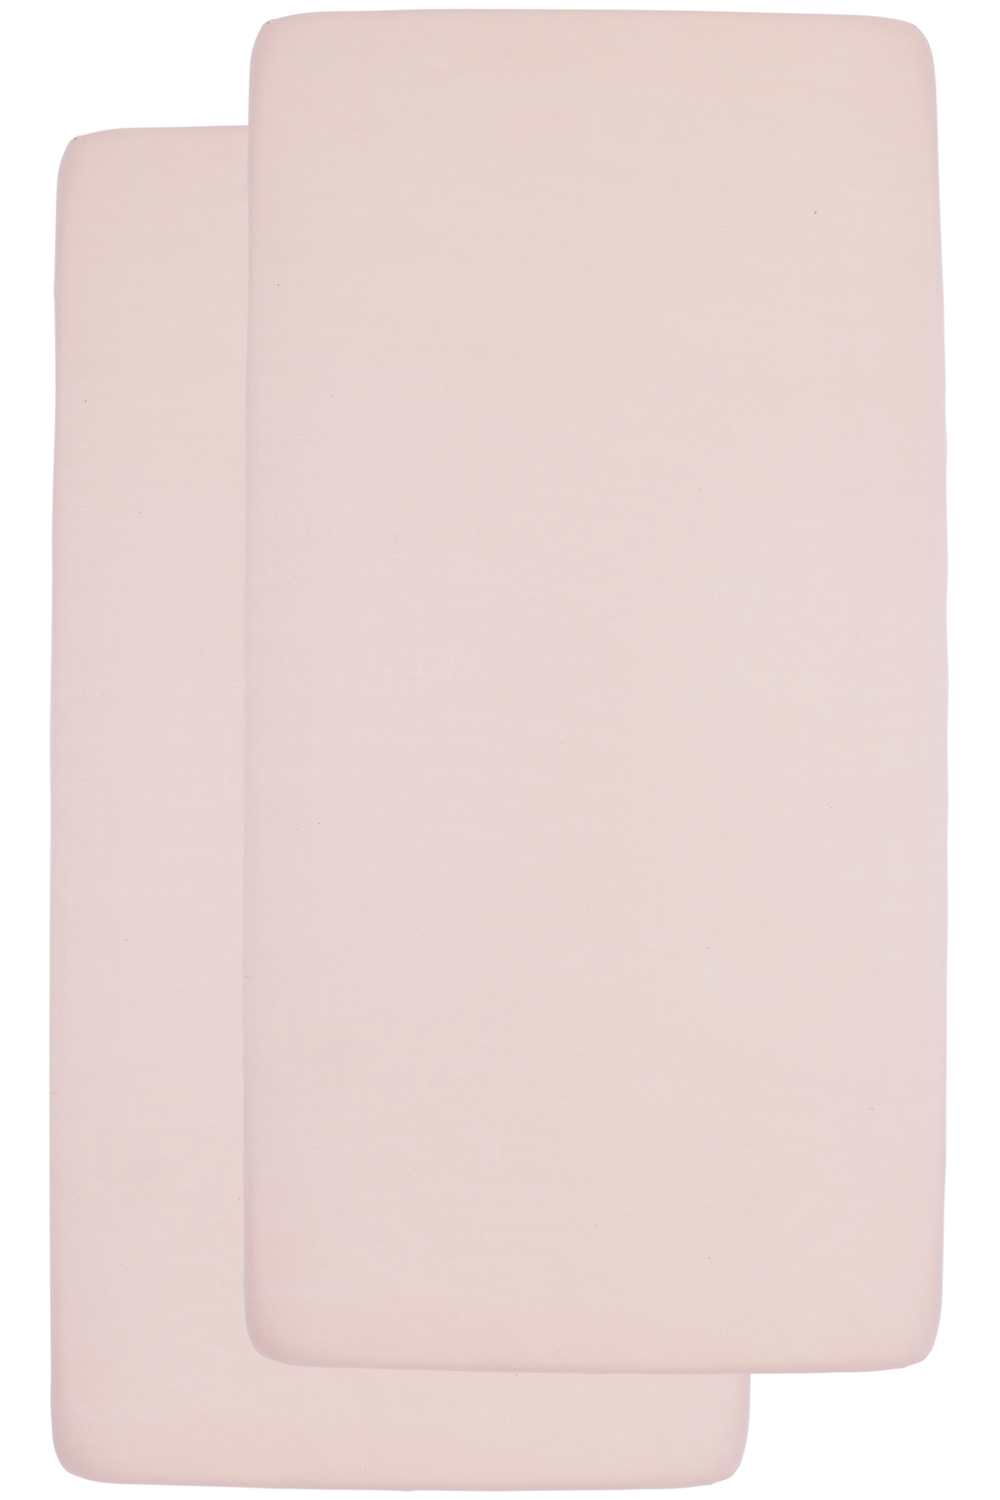 Jersey Hoeslaken Ledikant 2-pack - Soft Pink - 60x120cm